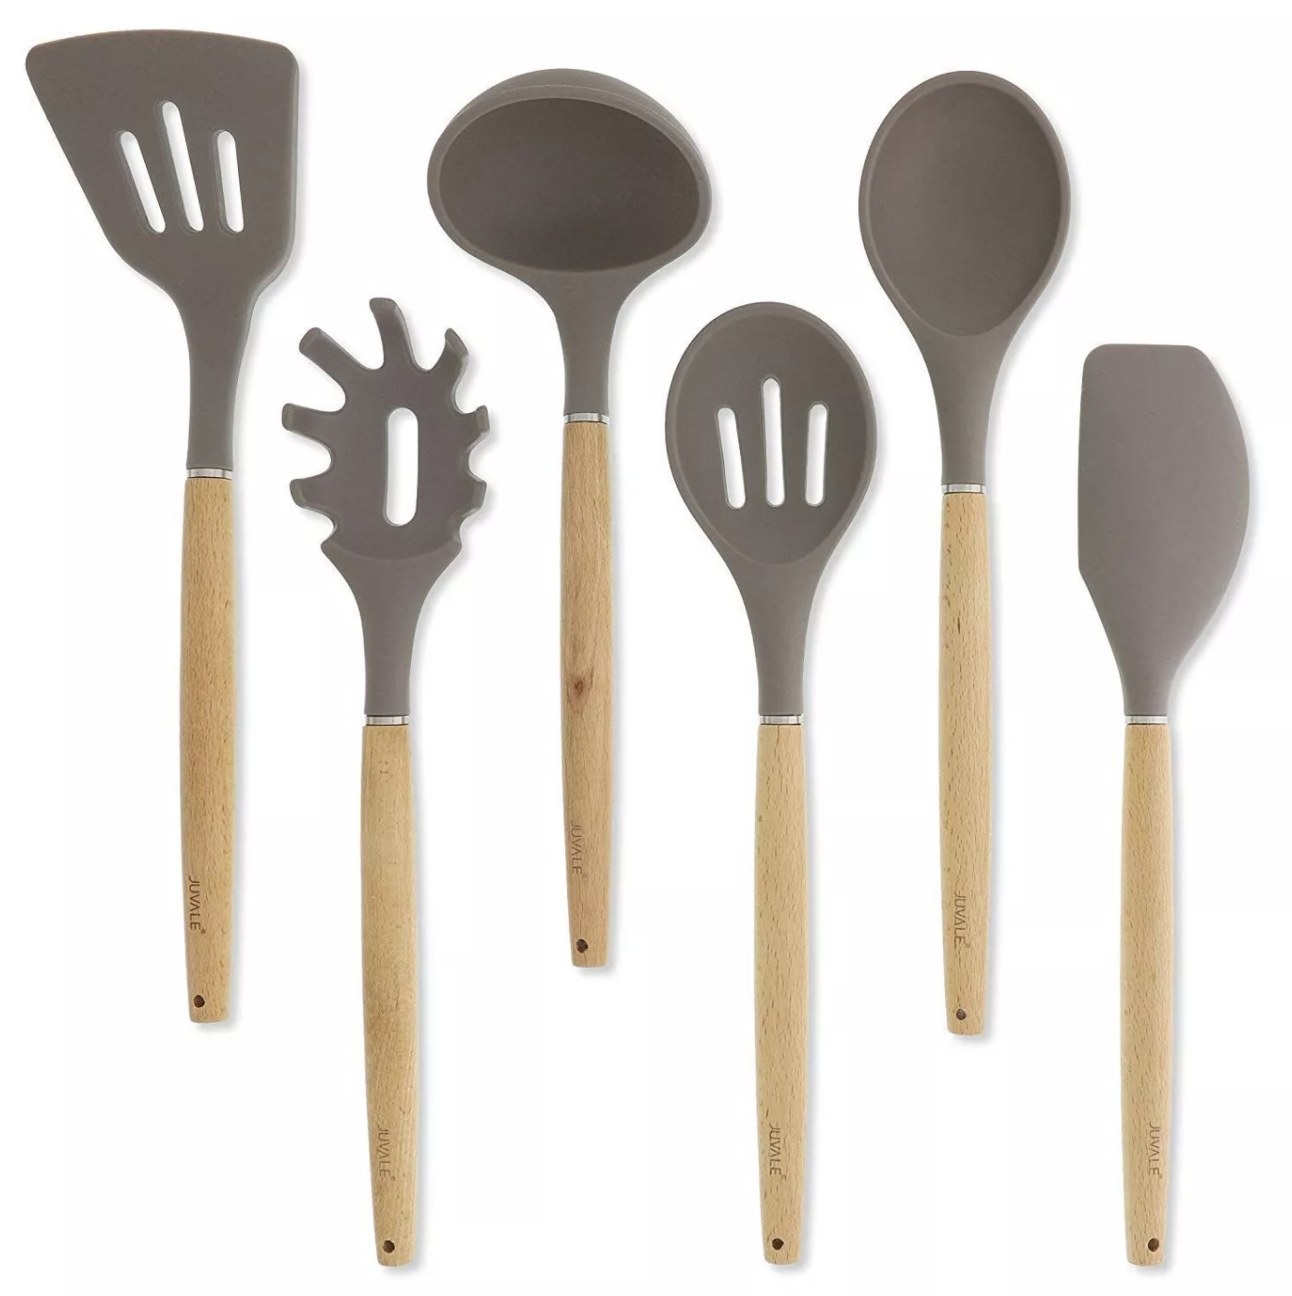 the utensils